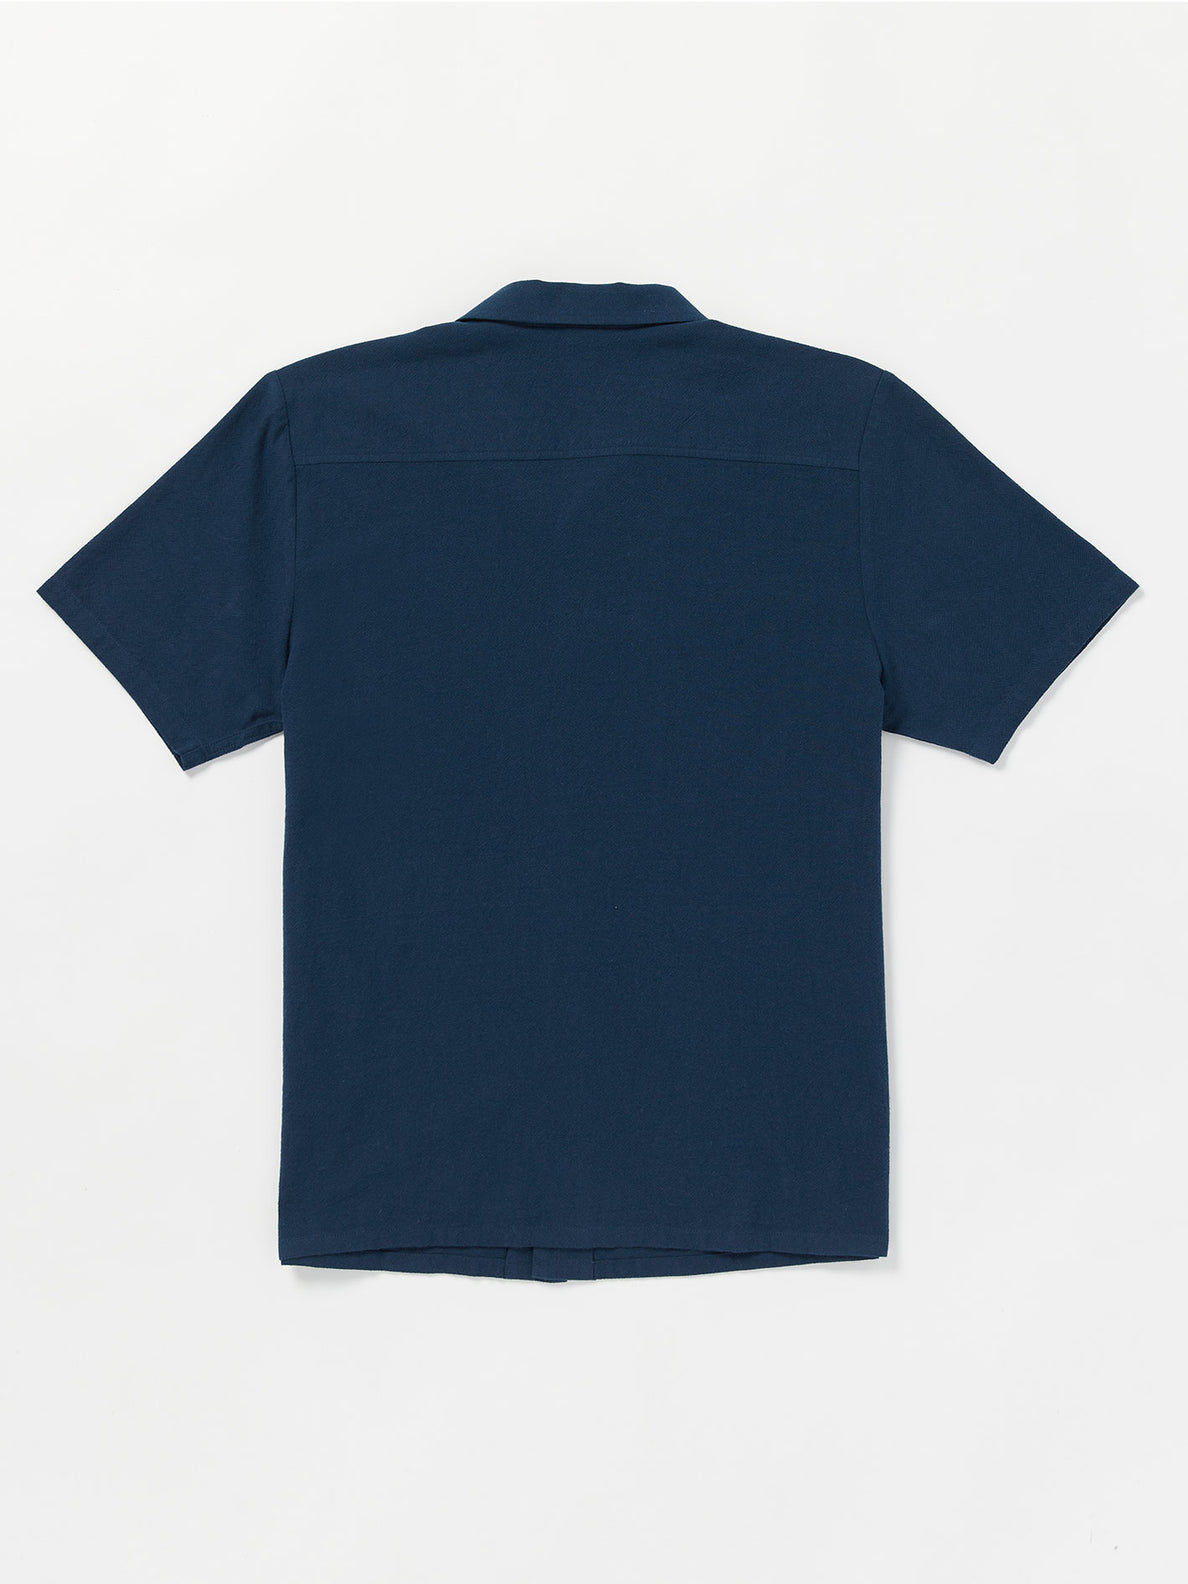 Stone Break Water Short Sleeve Shirt - Navy Paint